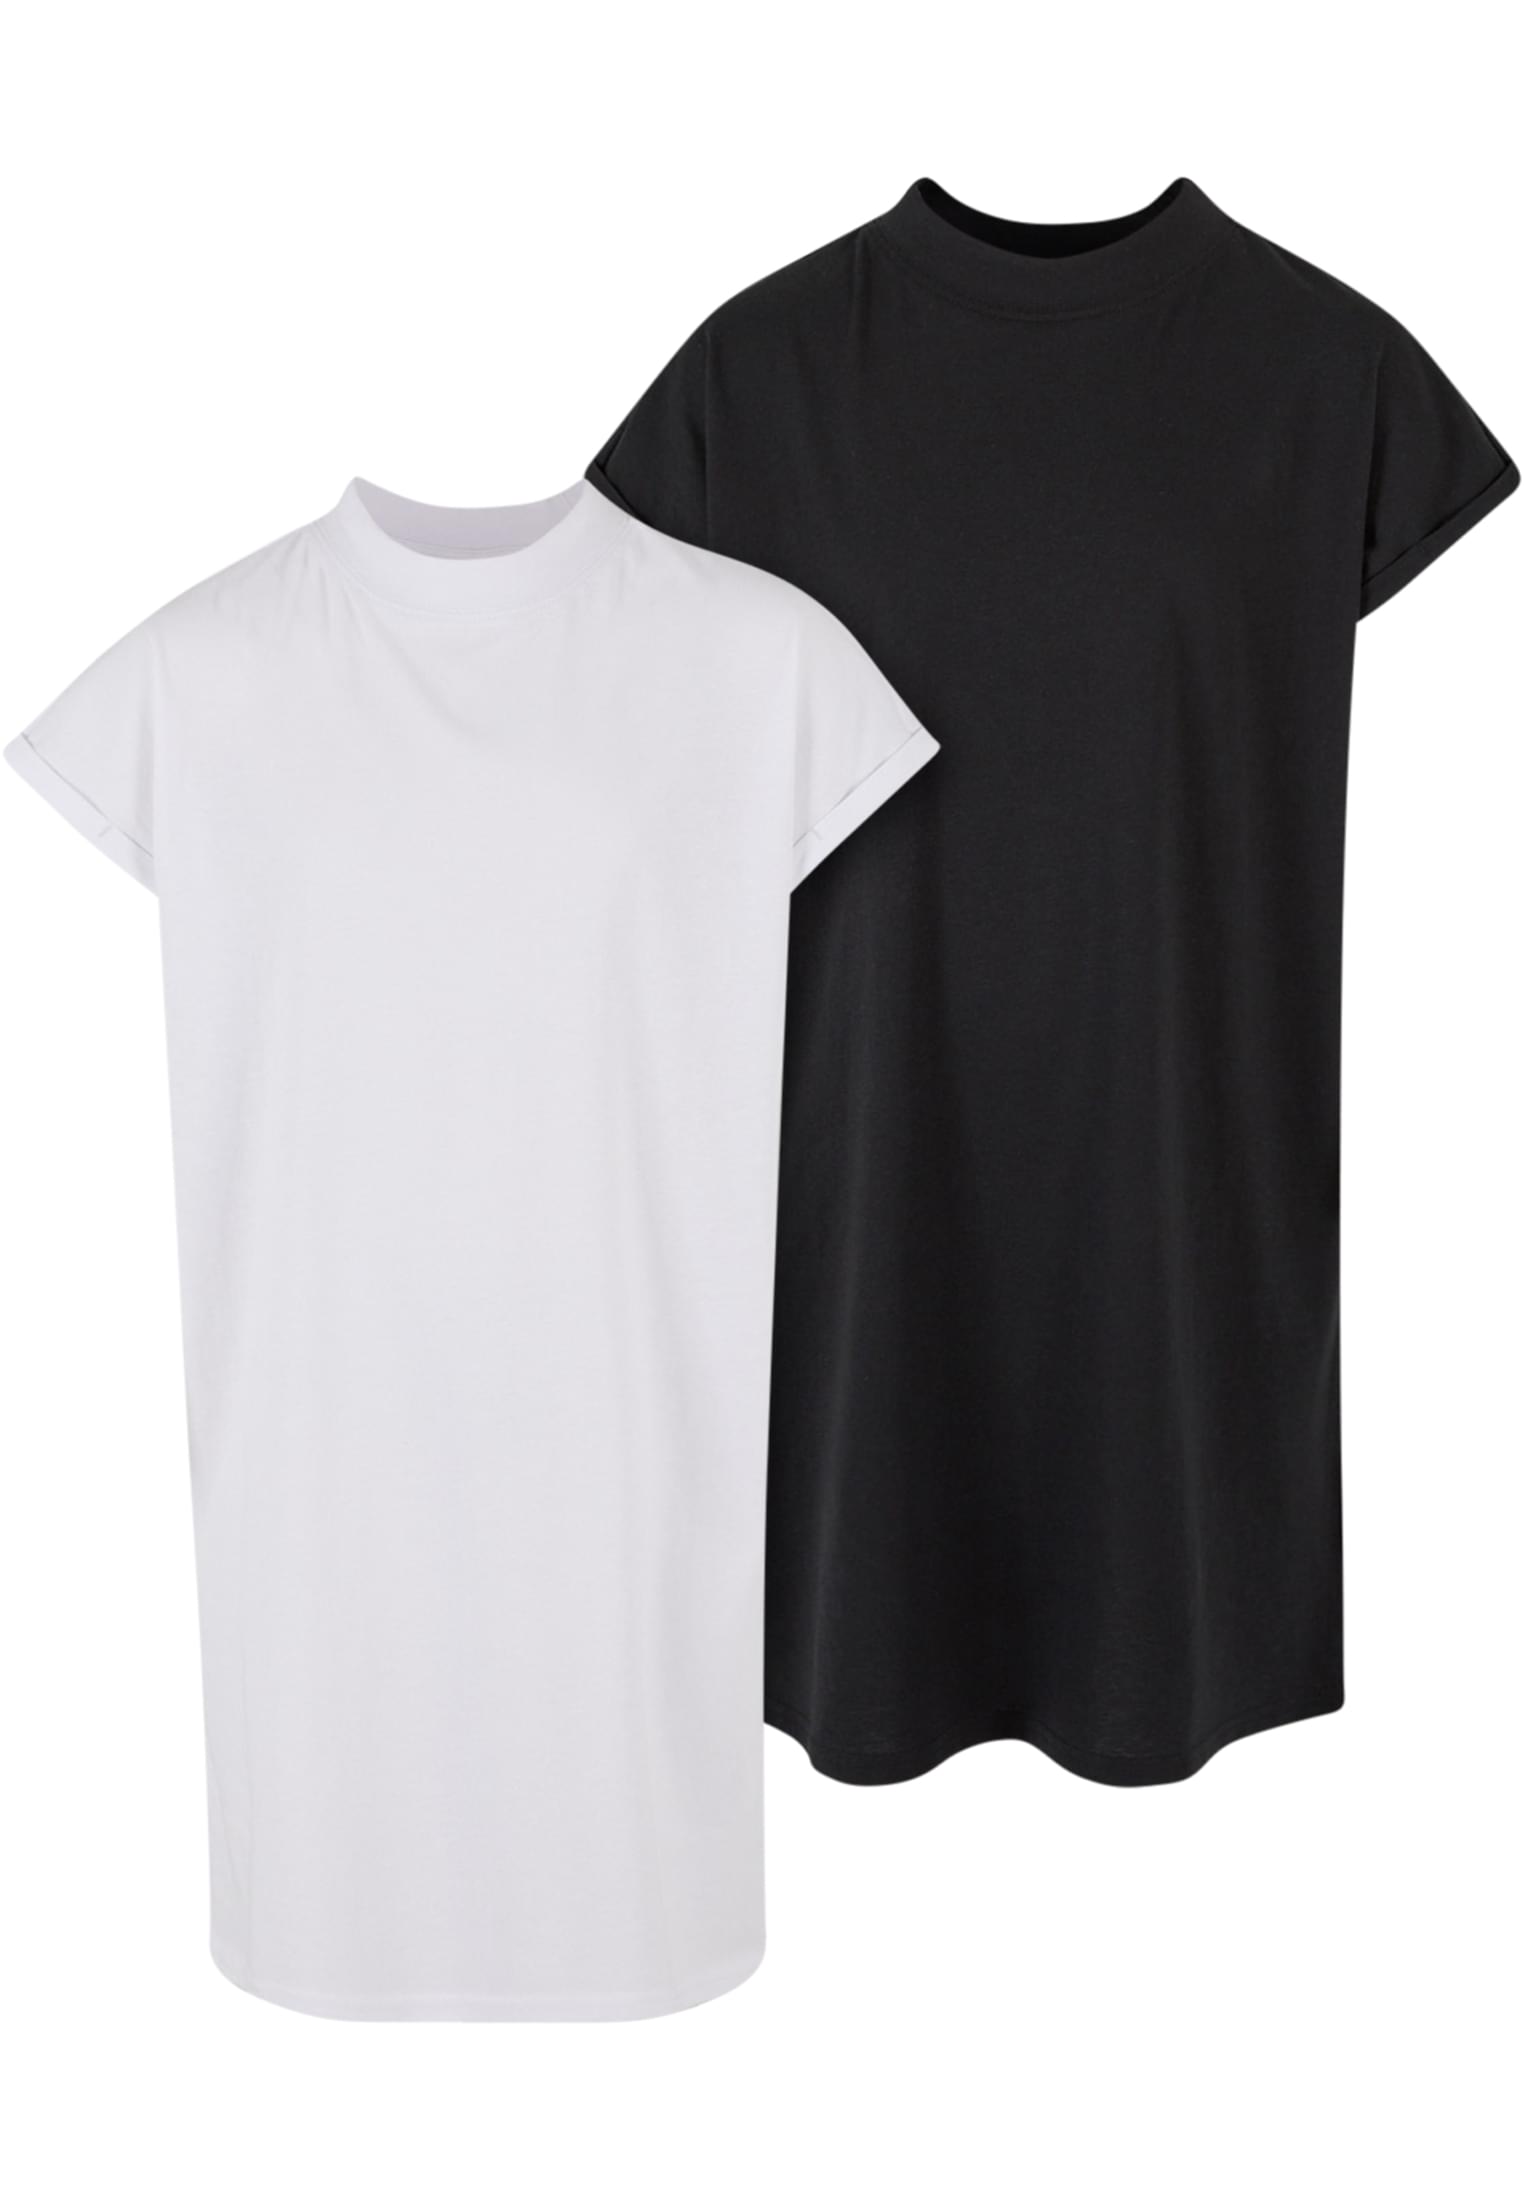 Turtle Extended Shoulder Dress for Girls - Black+White